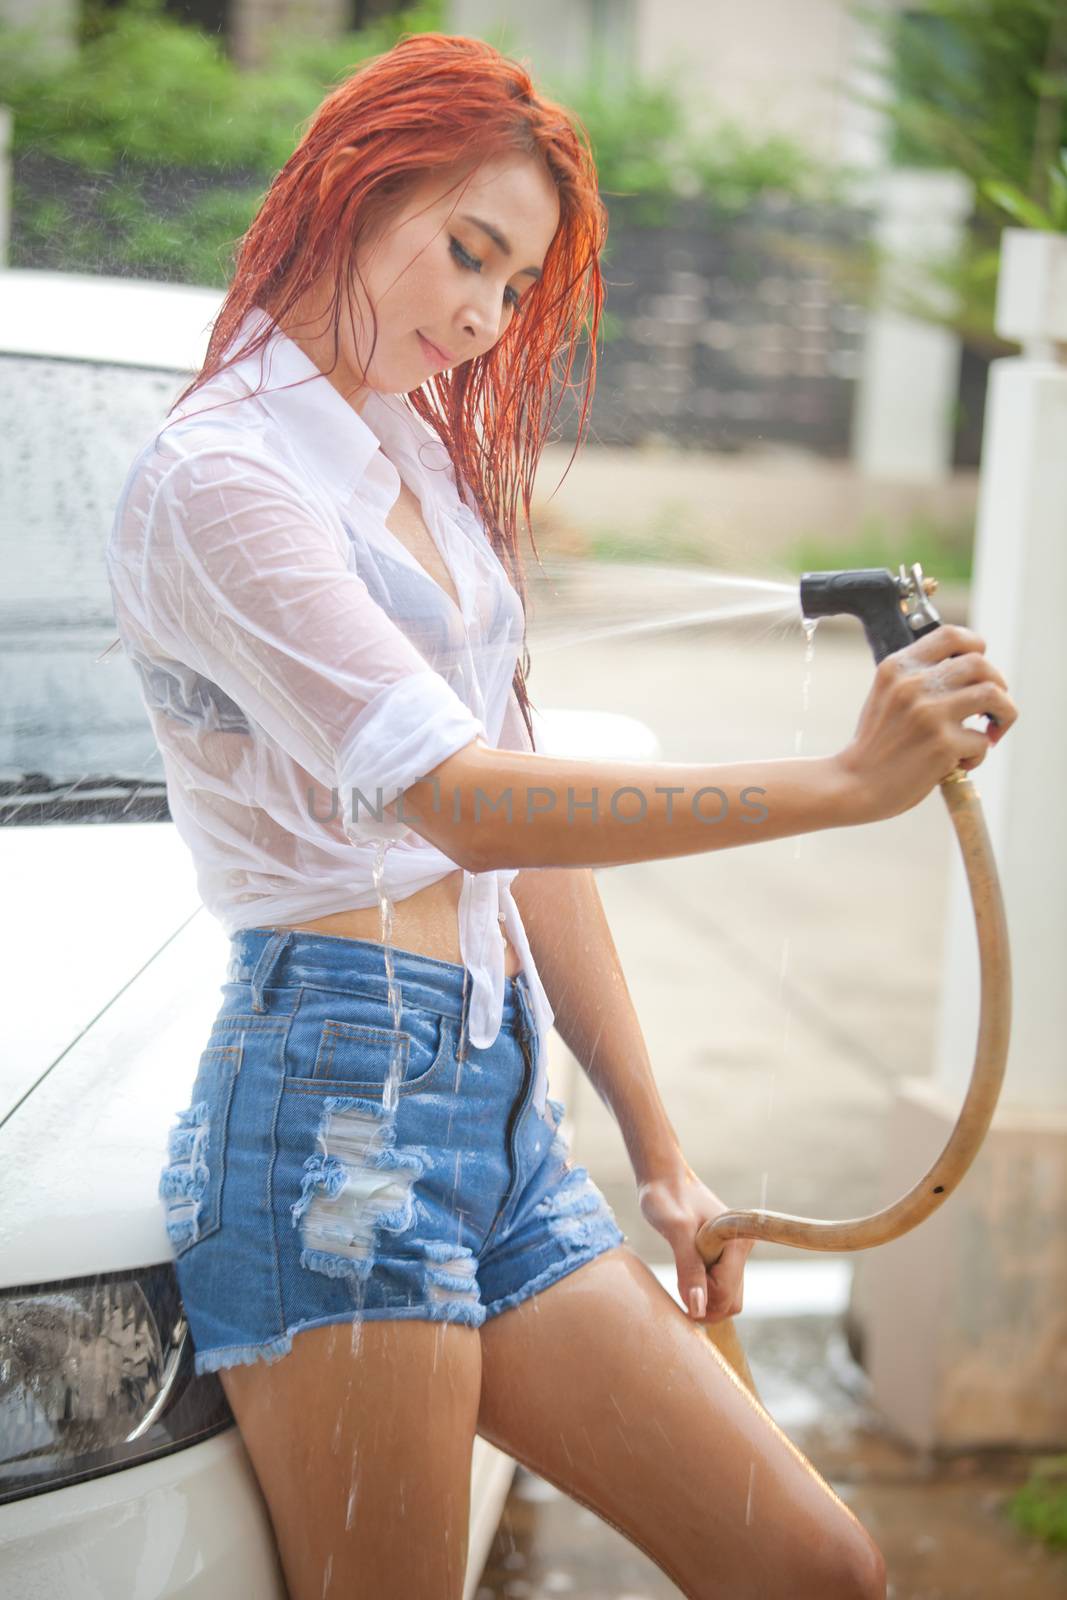 Woman washing a car by witthaya